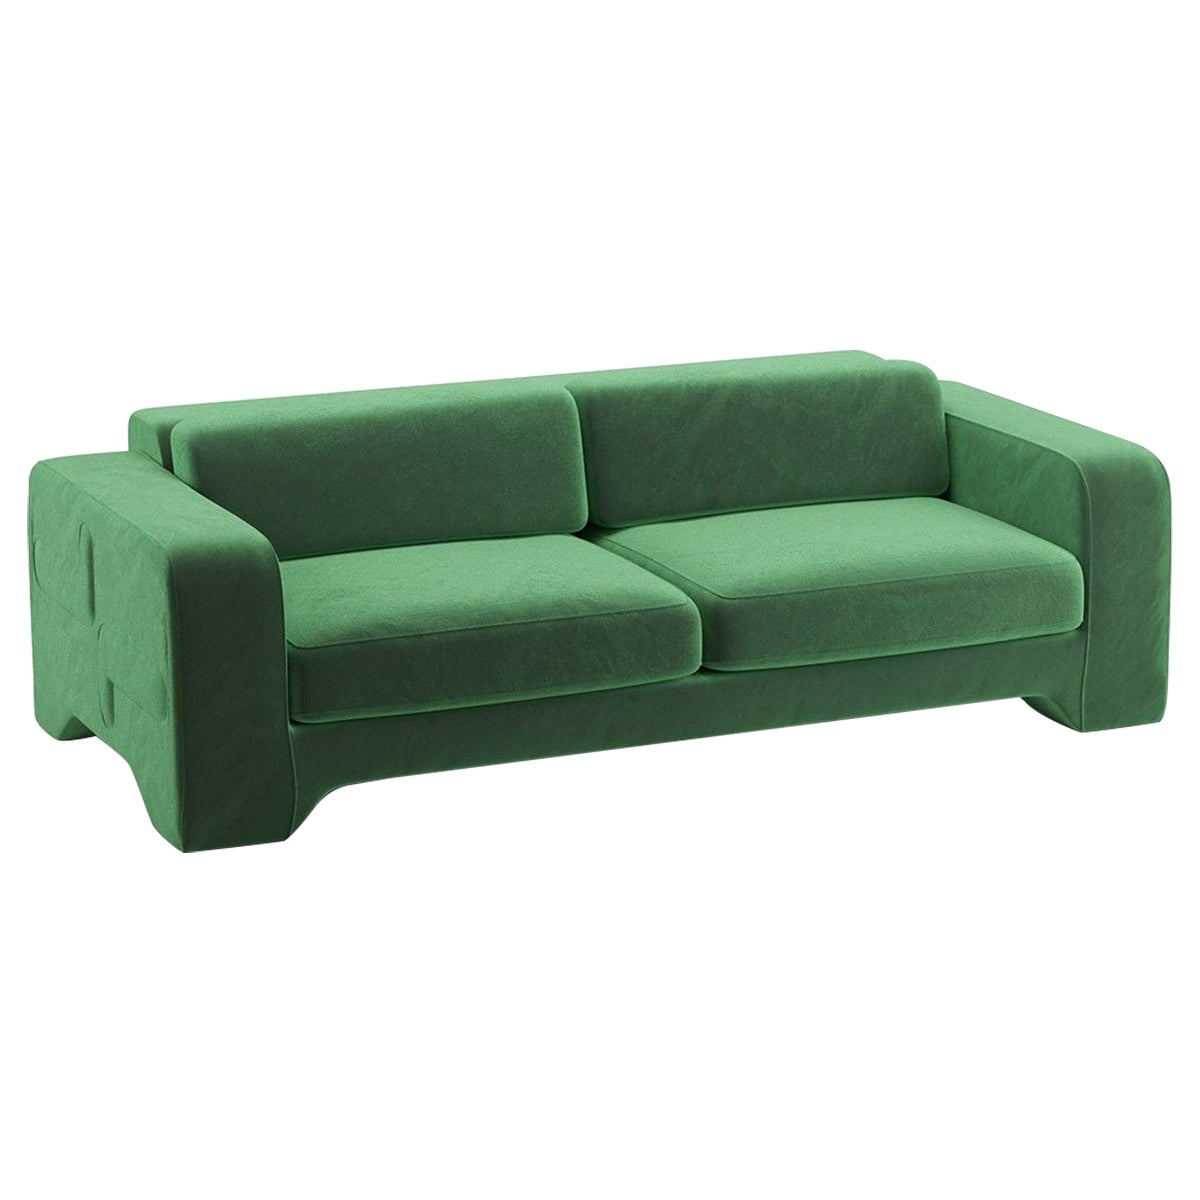 Popus Editions Giovanna 3 Seater Sofa in Green '771727'Como Velvet Upholstery